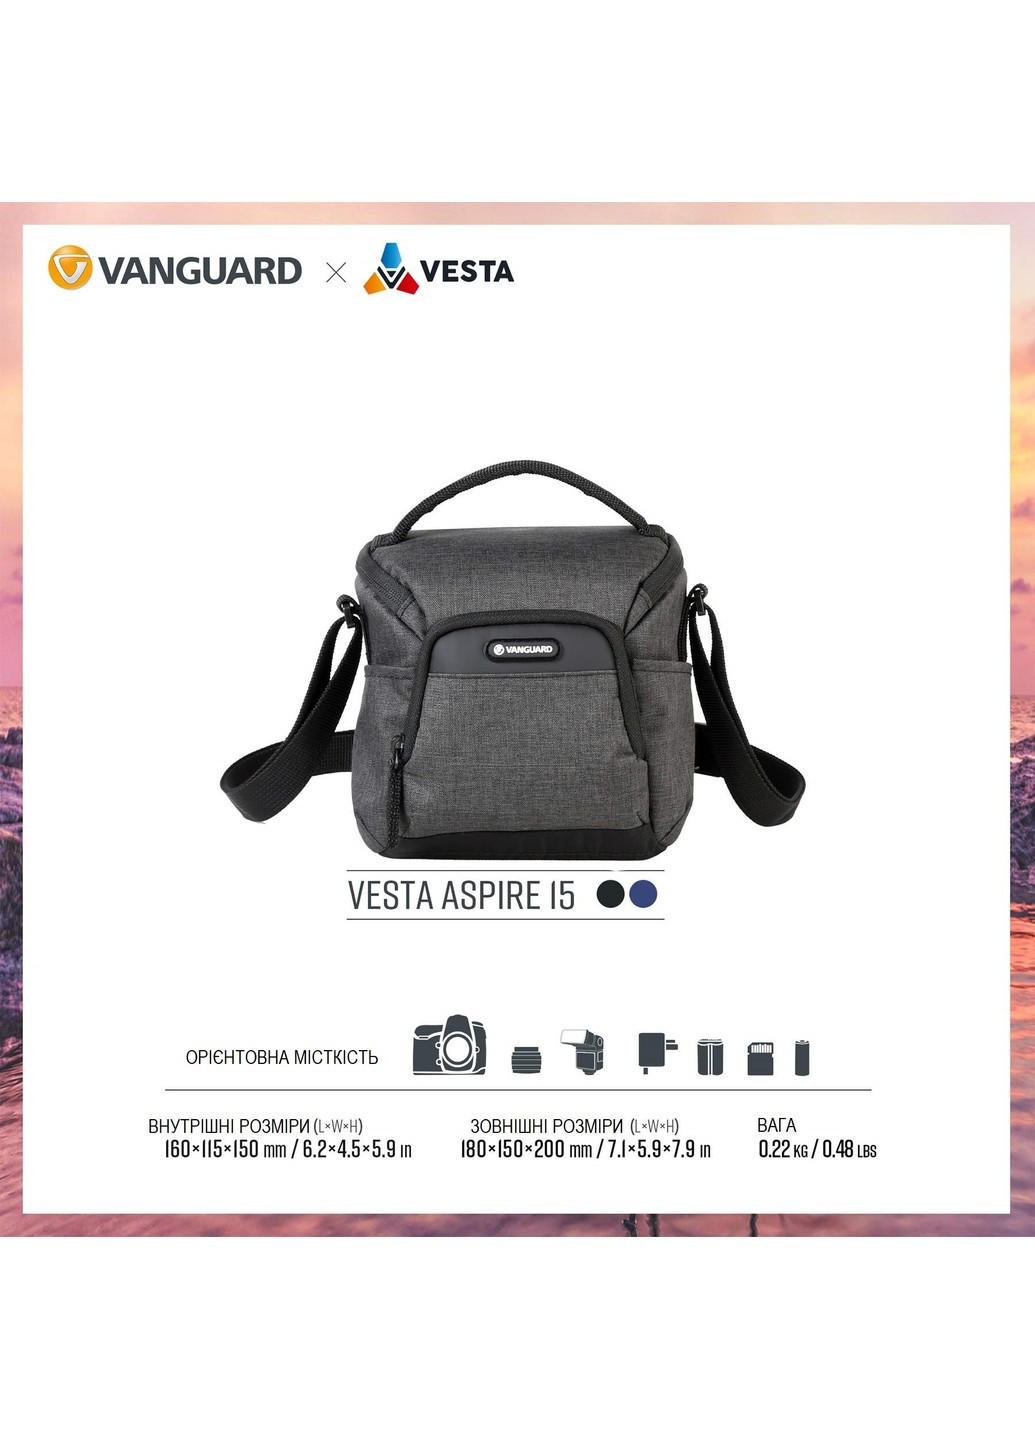 Сумка Vesta Aspire 15 Gray (Vesta Aspire 15 GY) Vanguard (252821621)